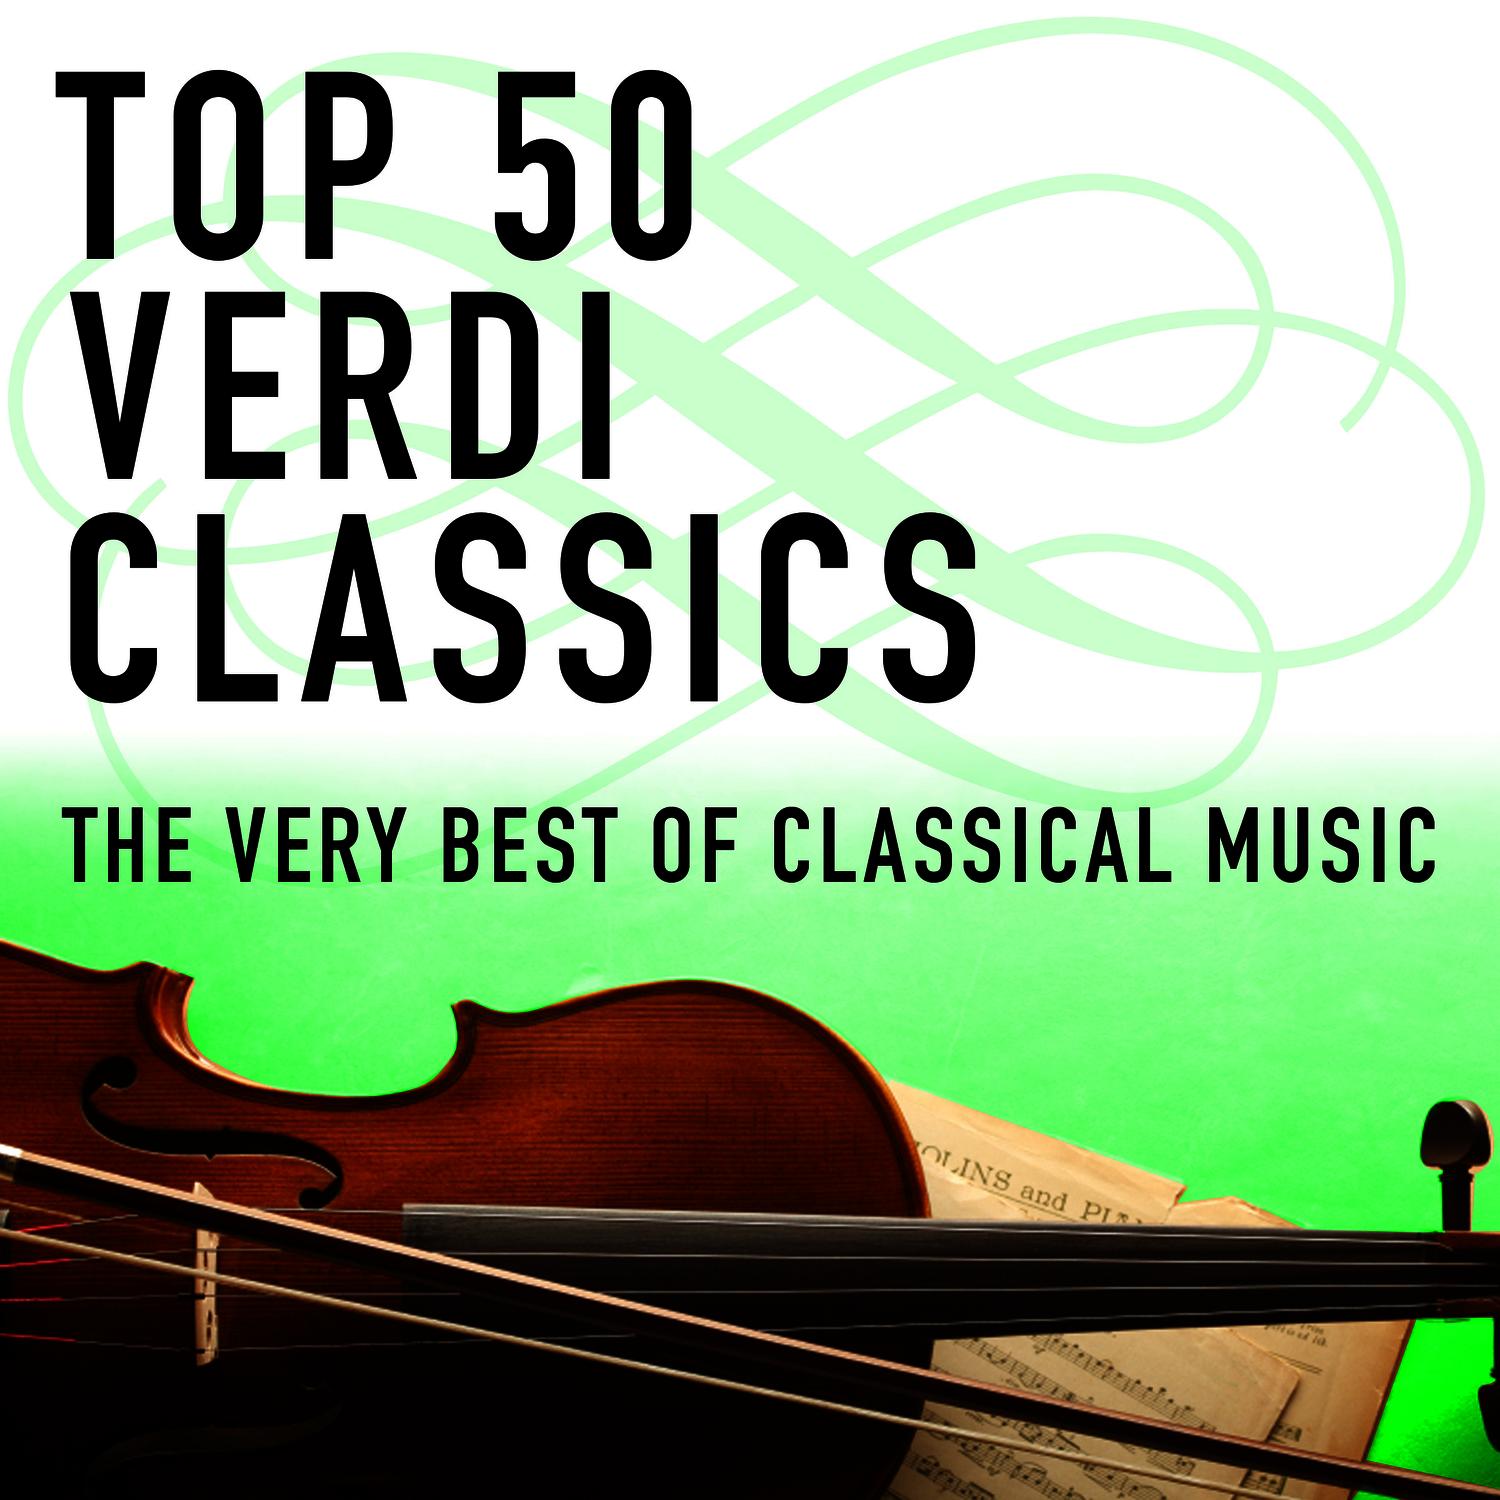 Top 50 Verdi Classics - The Very Best of Classical Music